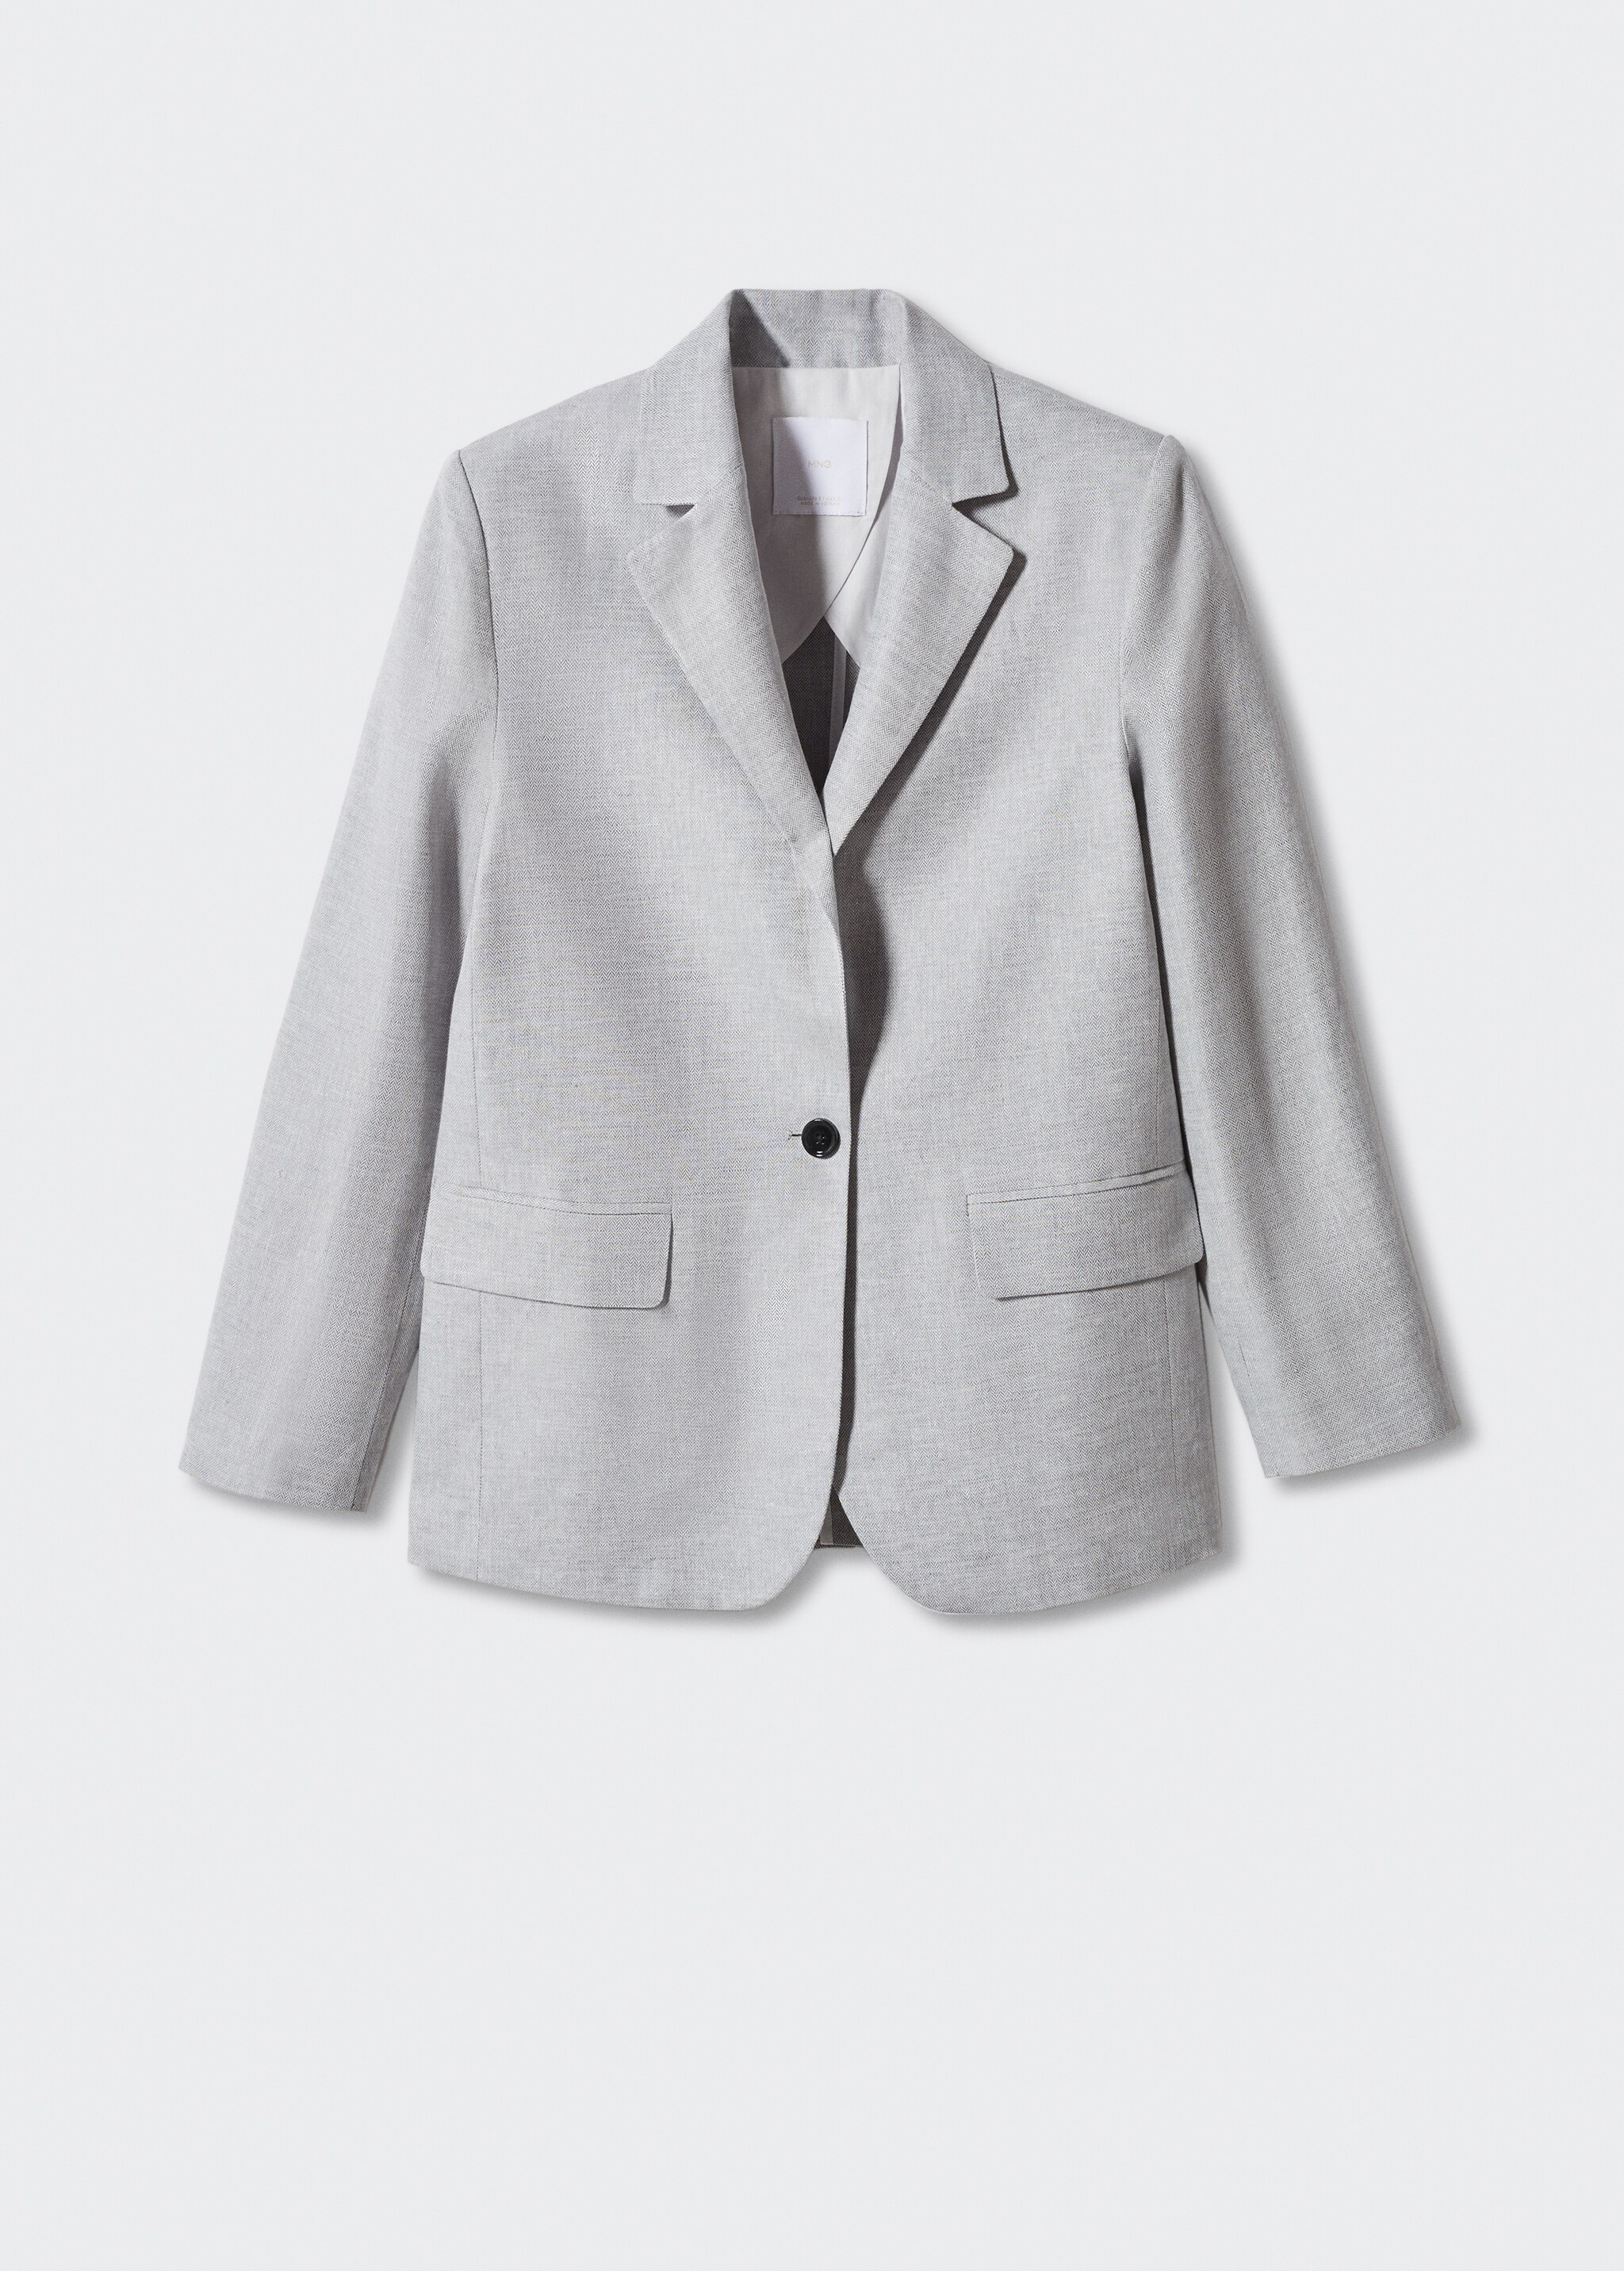 Herringbone linen suit jacket - Article without model